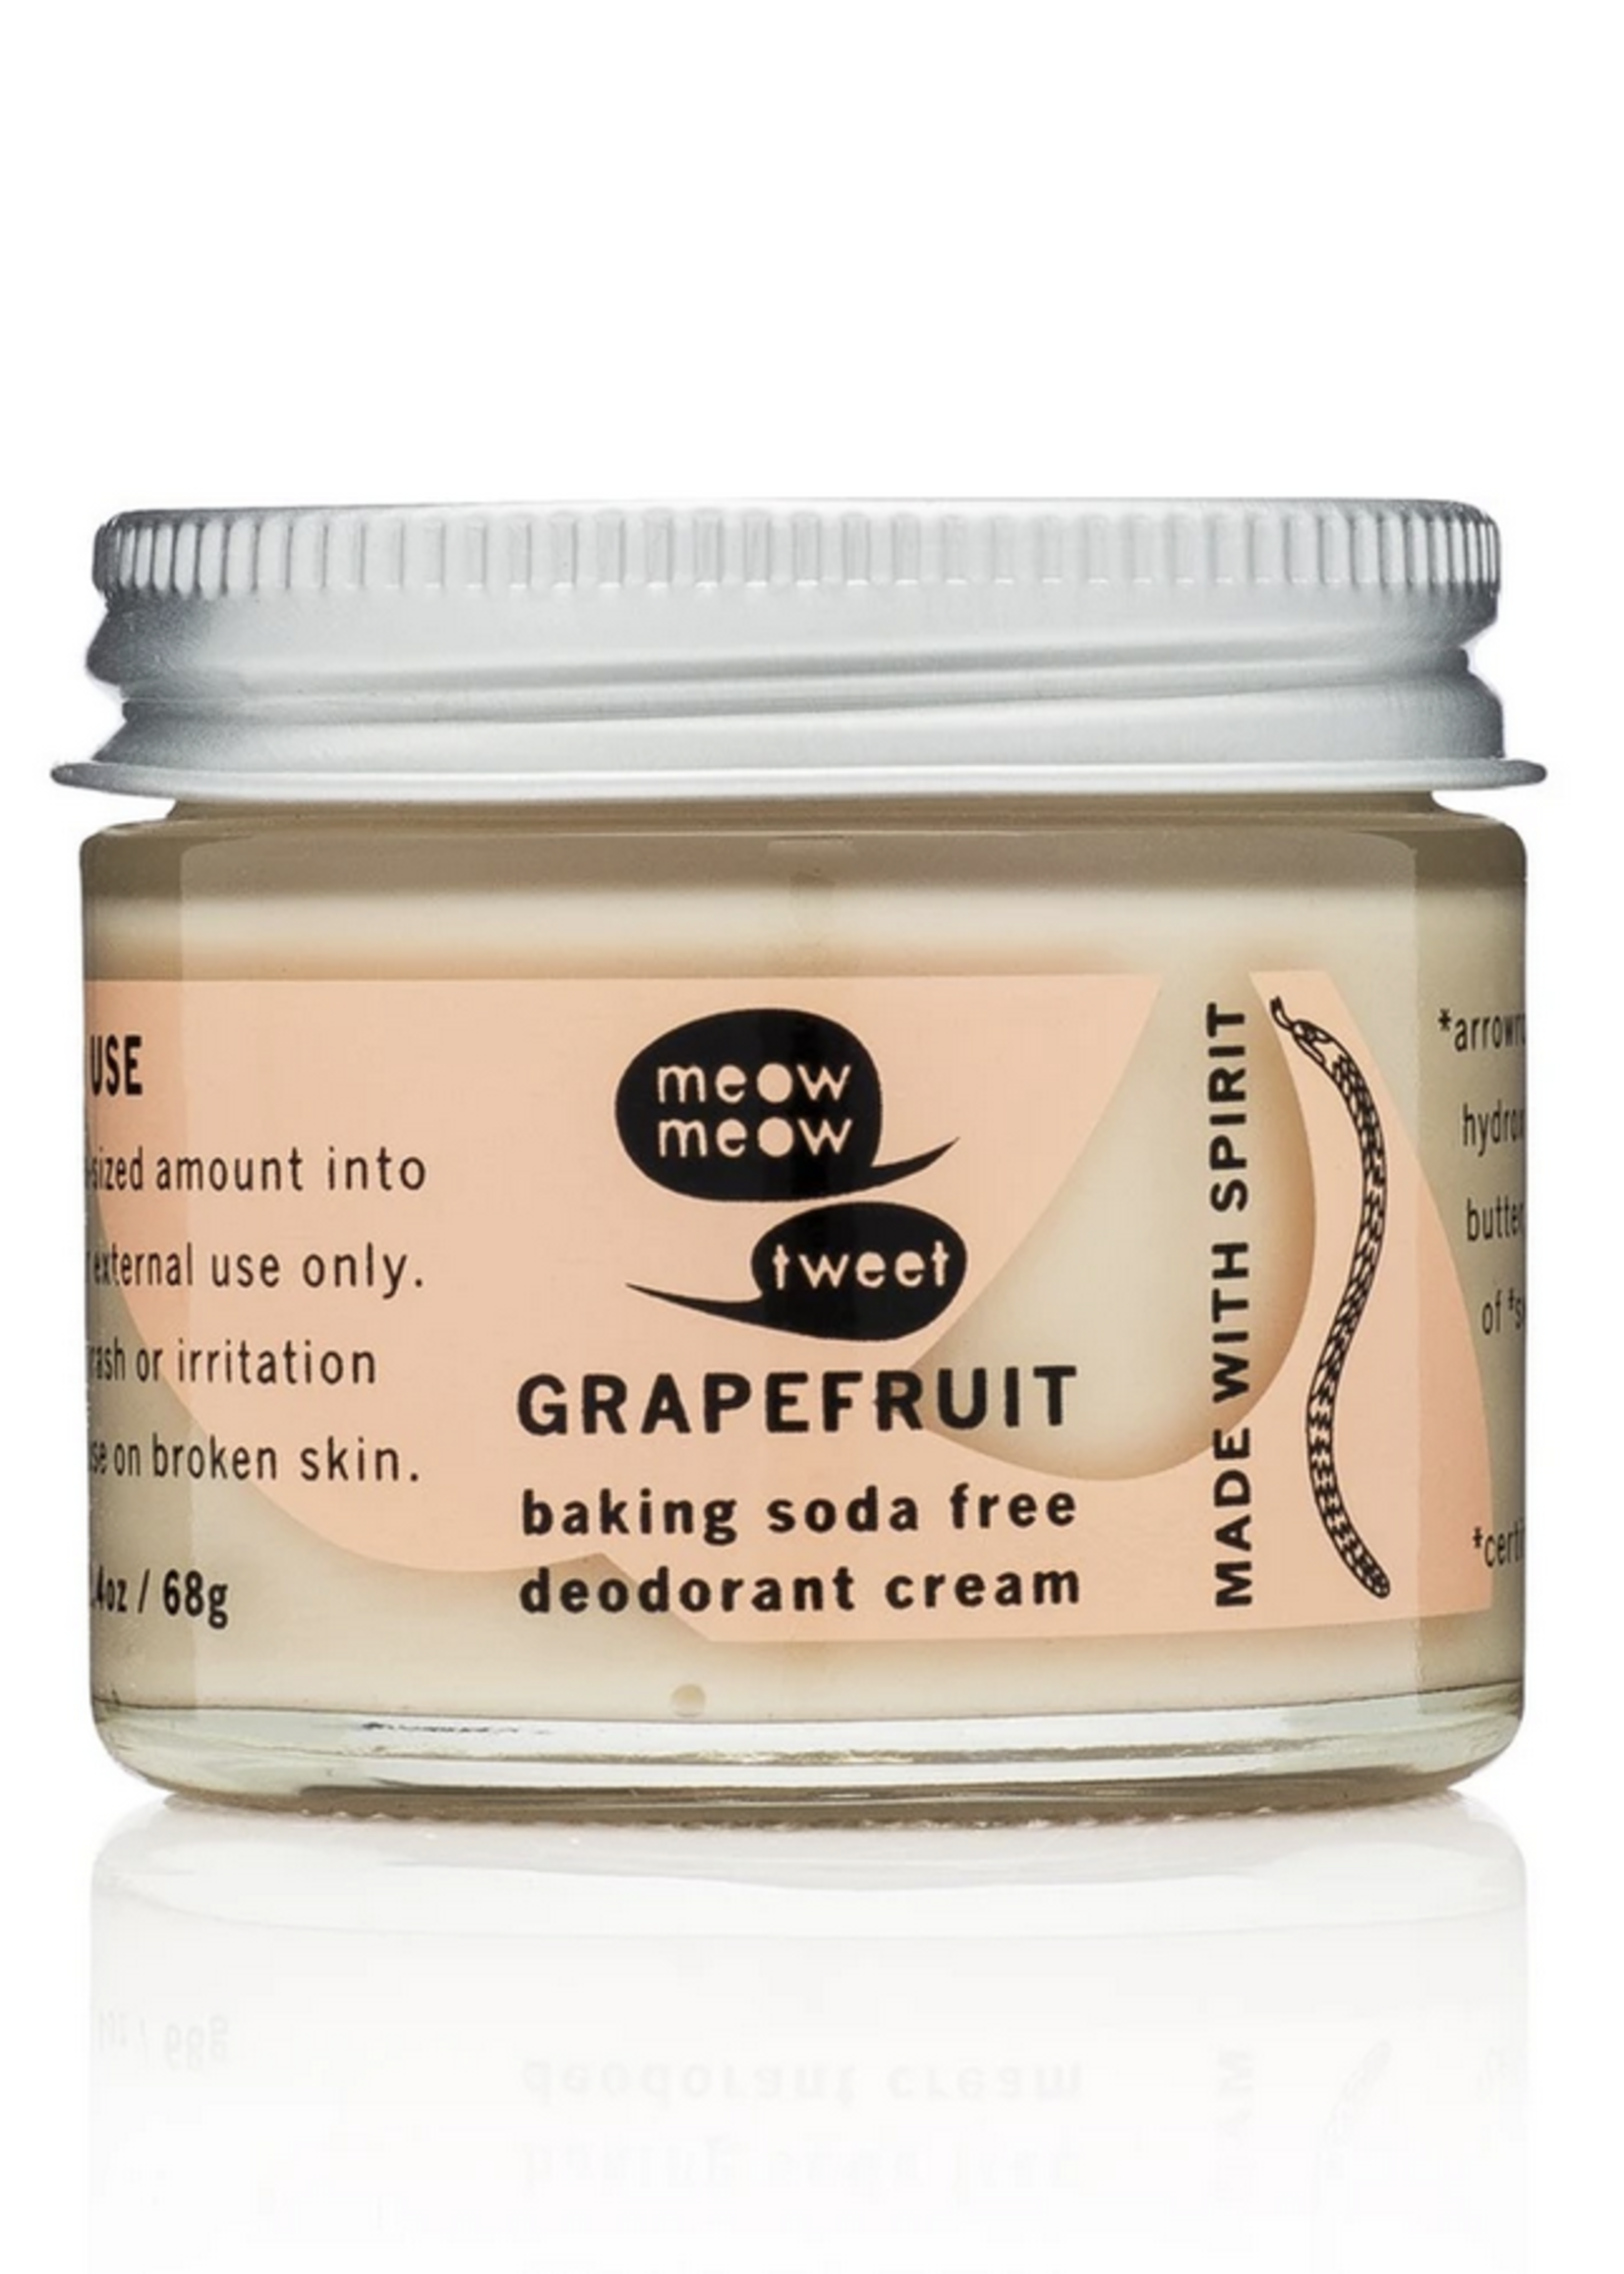 Meow Meow Tweet Baking Soda Free Deodorant Cream: Grapefruit